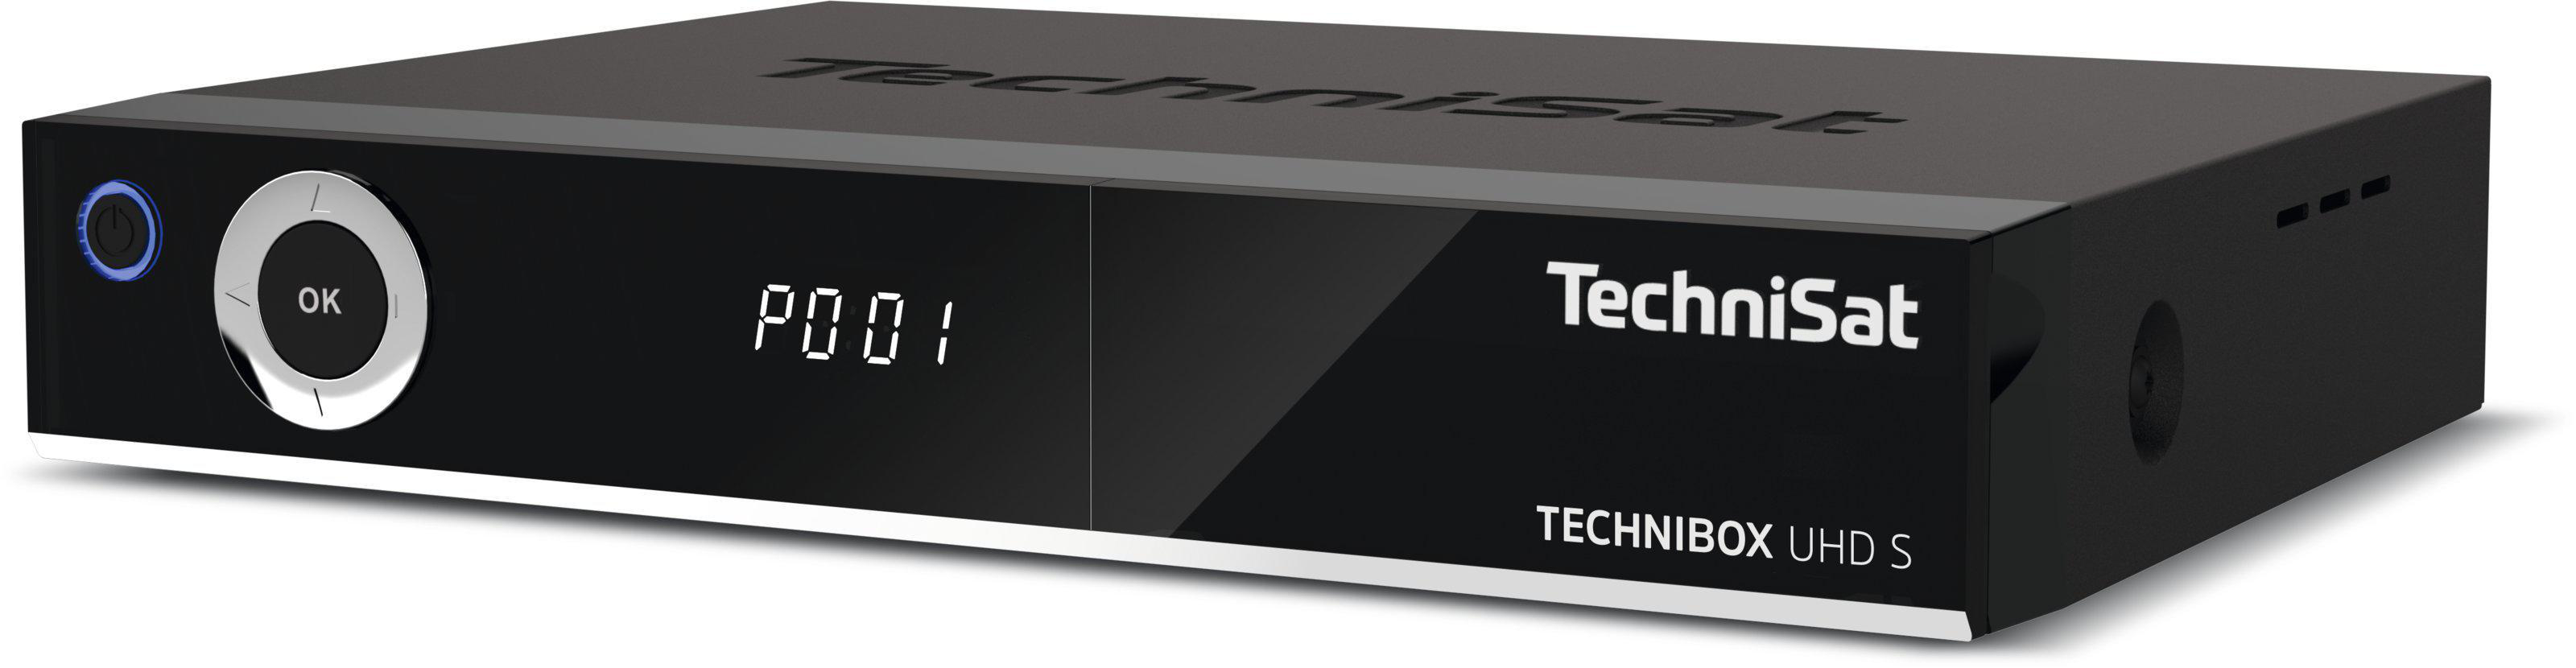 TECHNIBOX S TECHNISAT DVB-S, Twin Tuner, DVB-S2, Schwarz) UHD Receiver (PVR-Funktion,